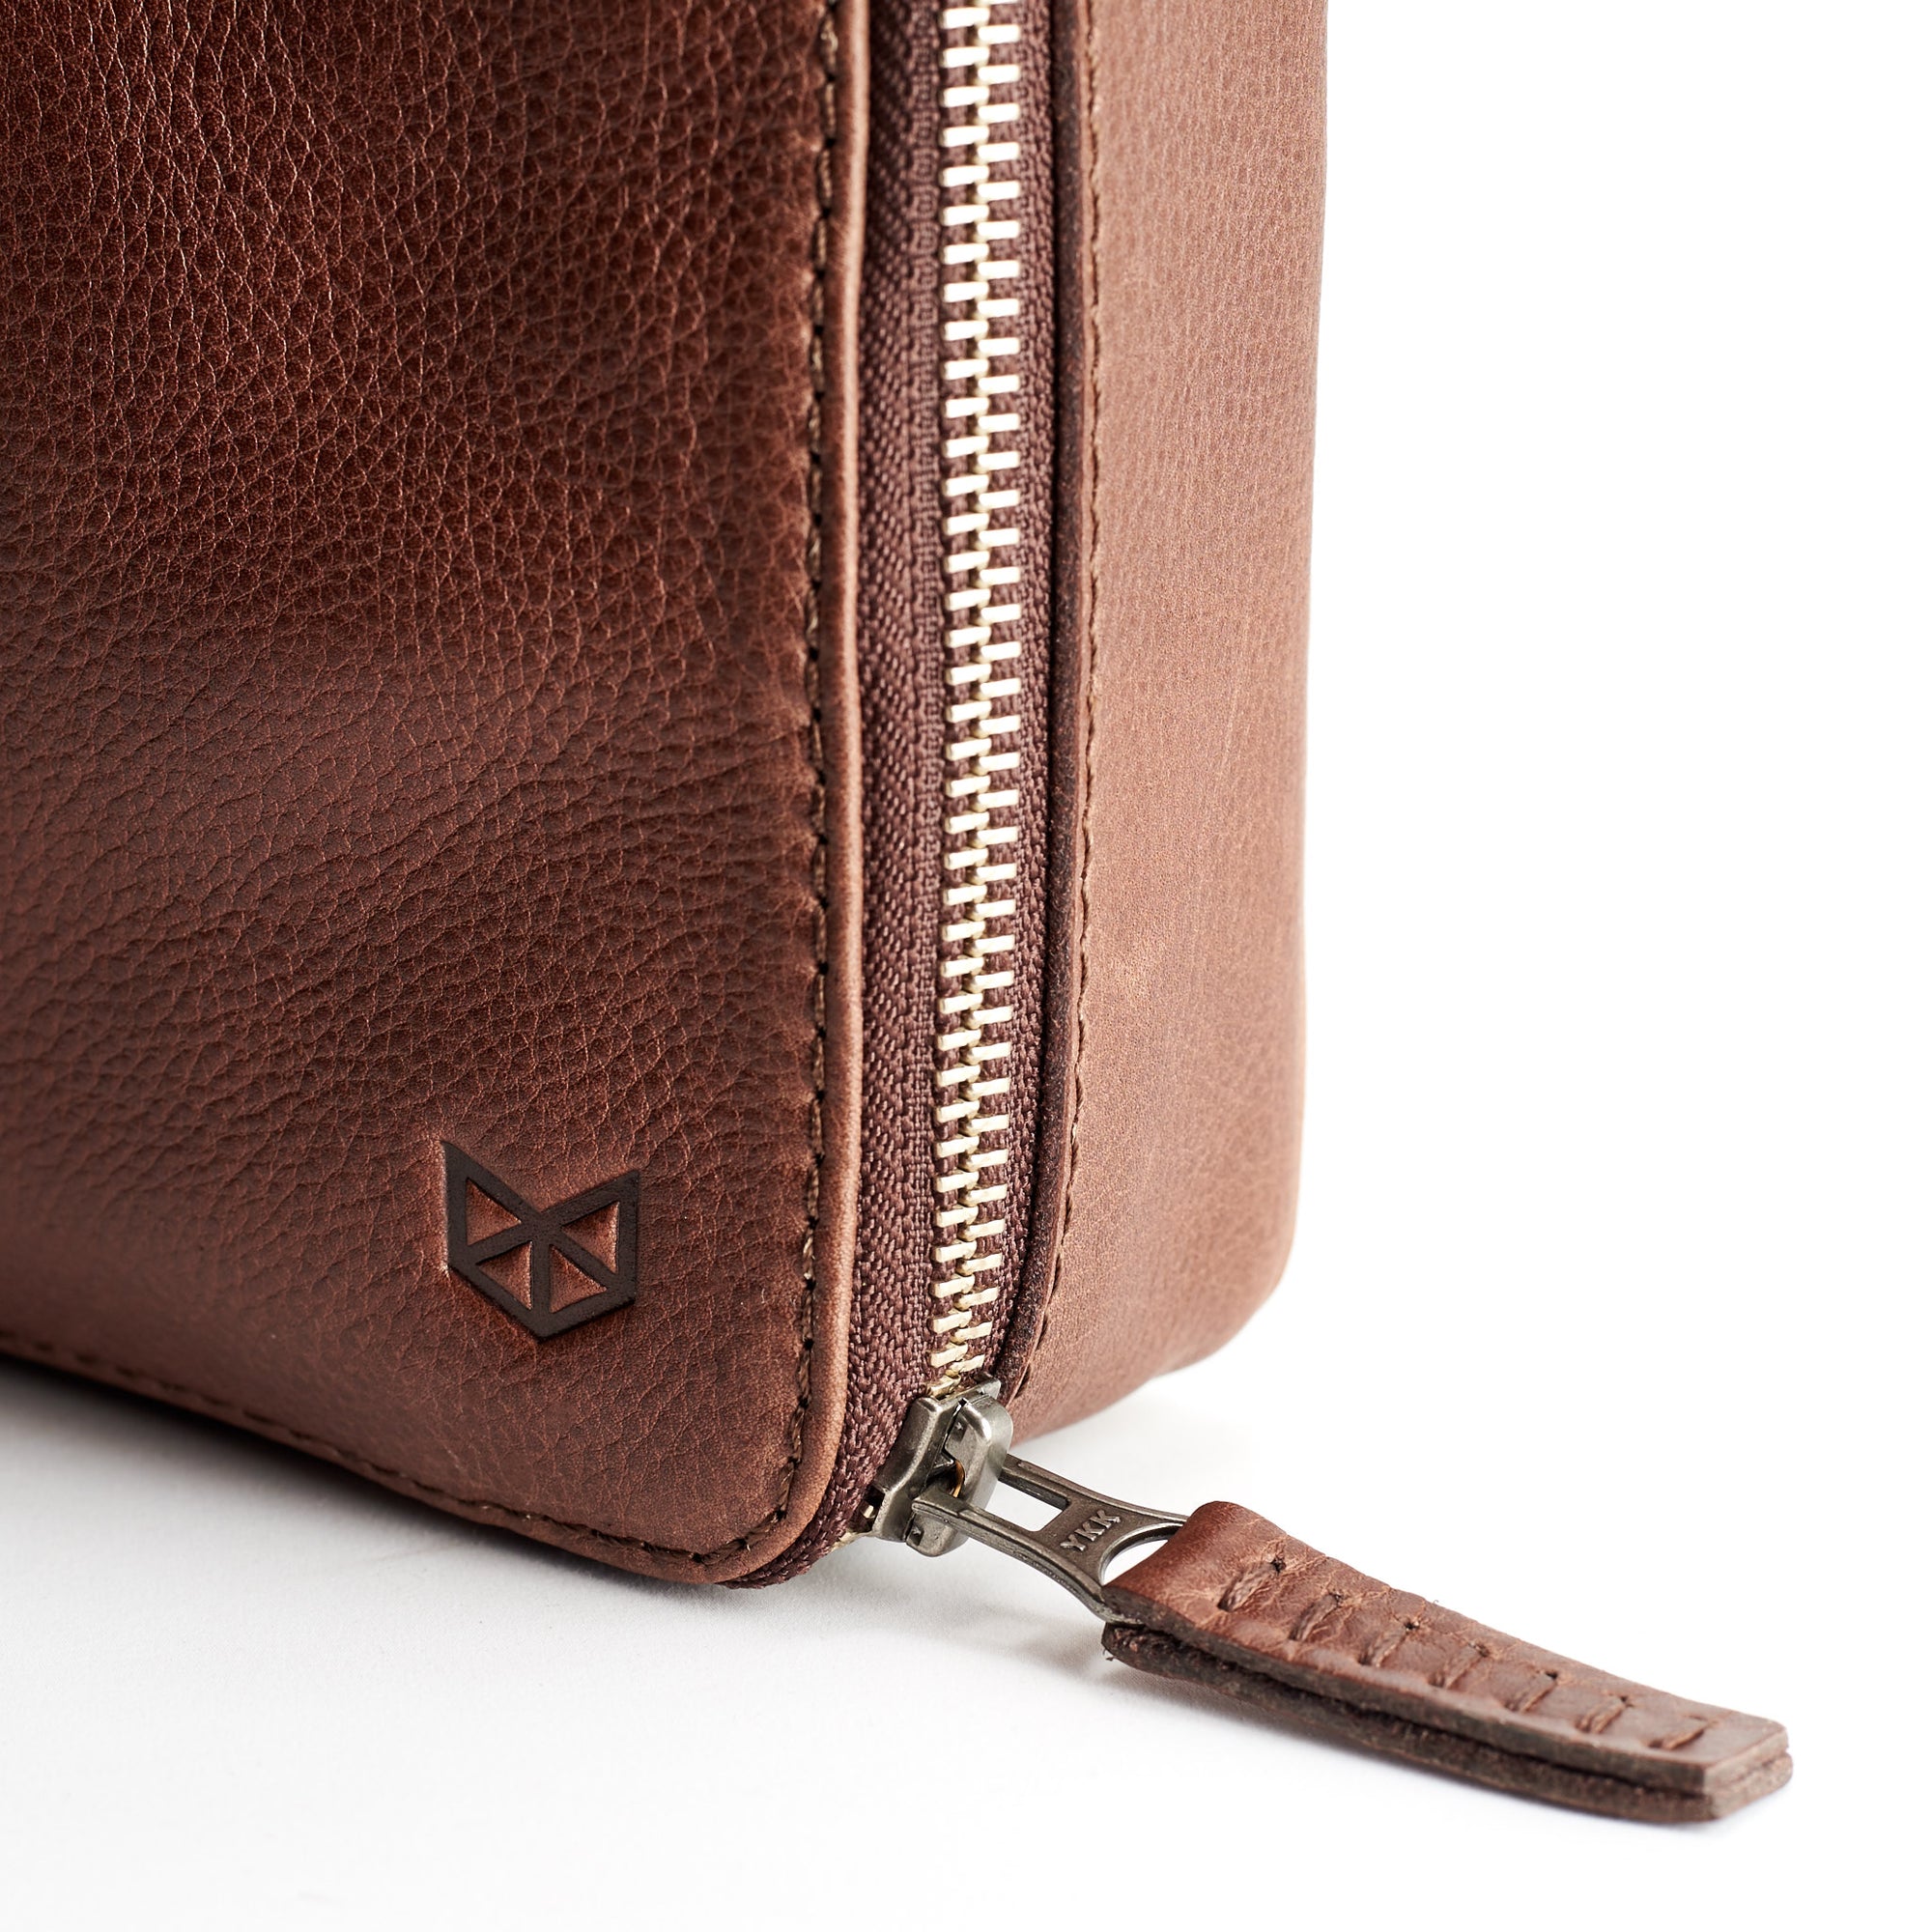 Metallic YKK zipper. Brown travel electronics organizer by Capra Leather